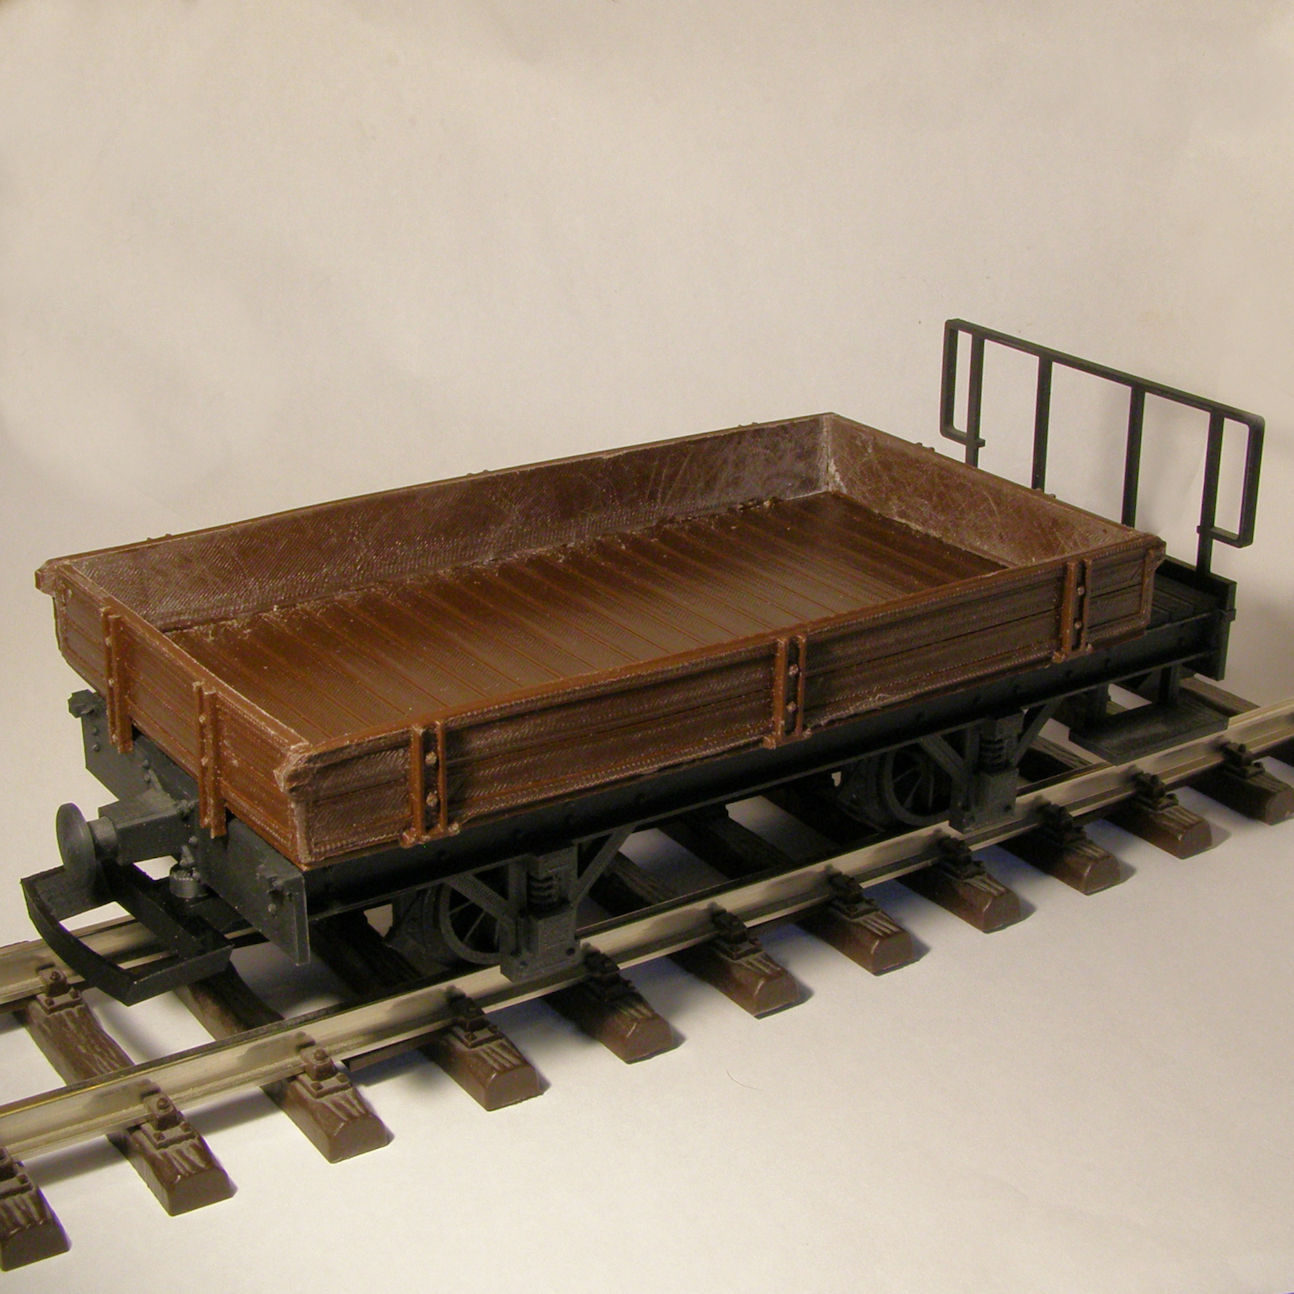 Low Side Car for Garden Railway